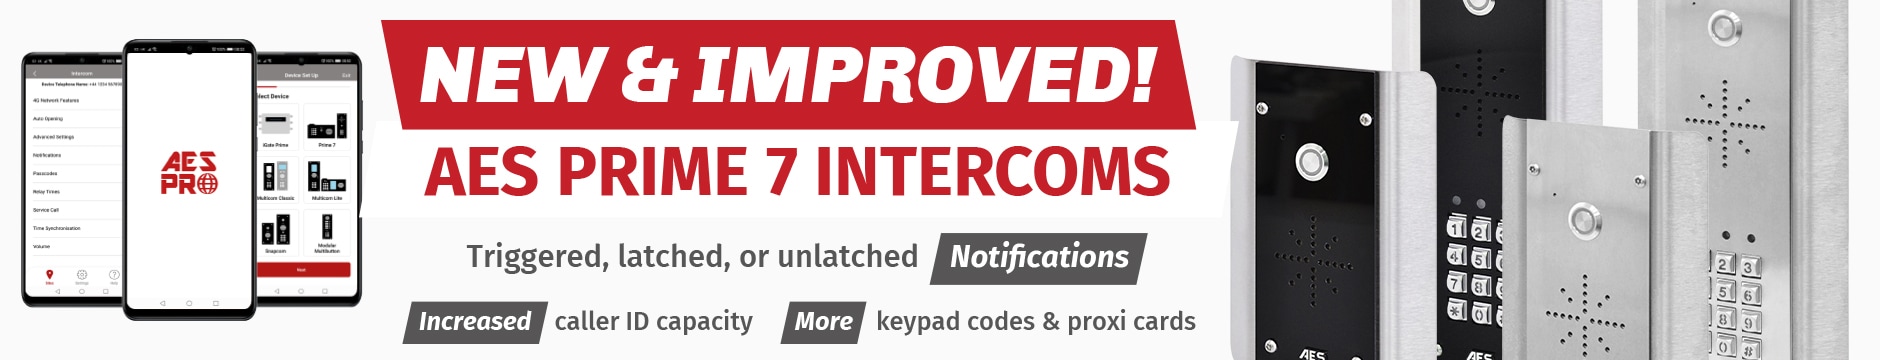 New & improved! AES Cellcom Prime 7 intercoms